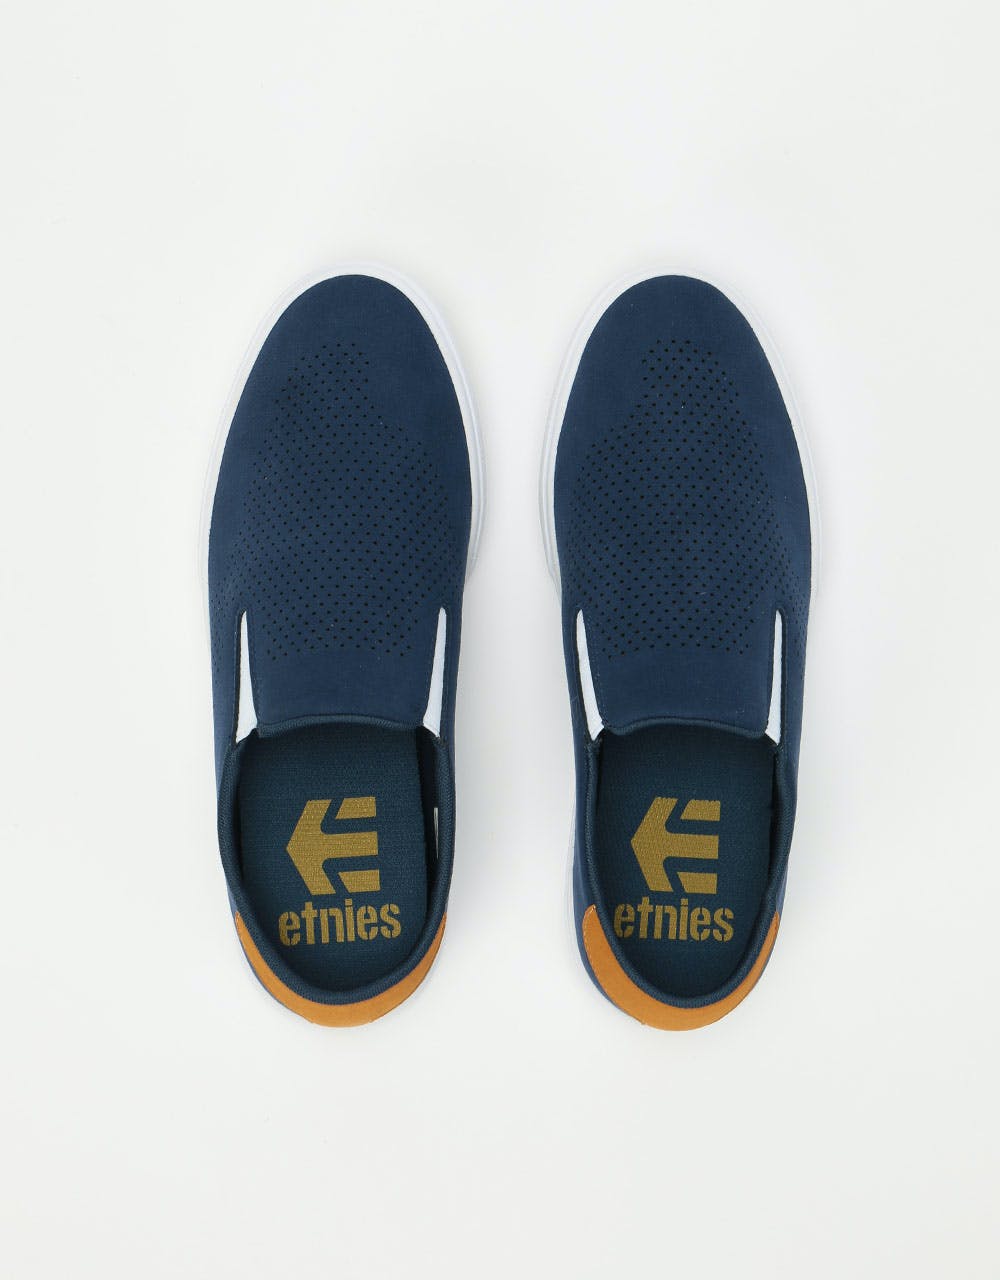 Etnies Cirrus Skate Shoes - Navy/Tan